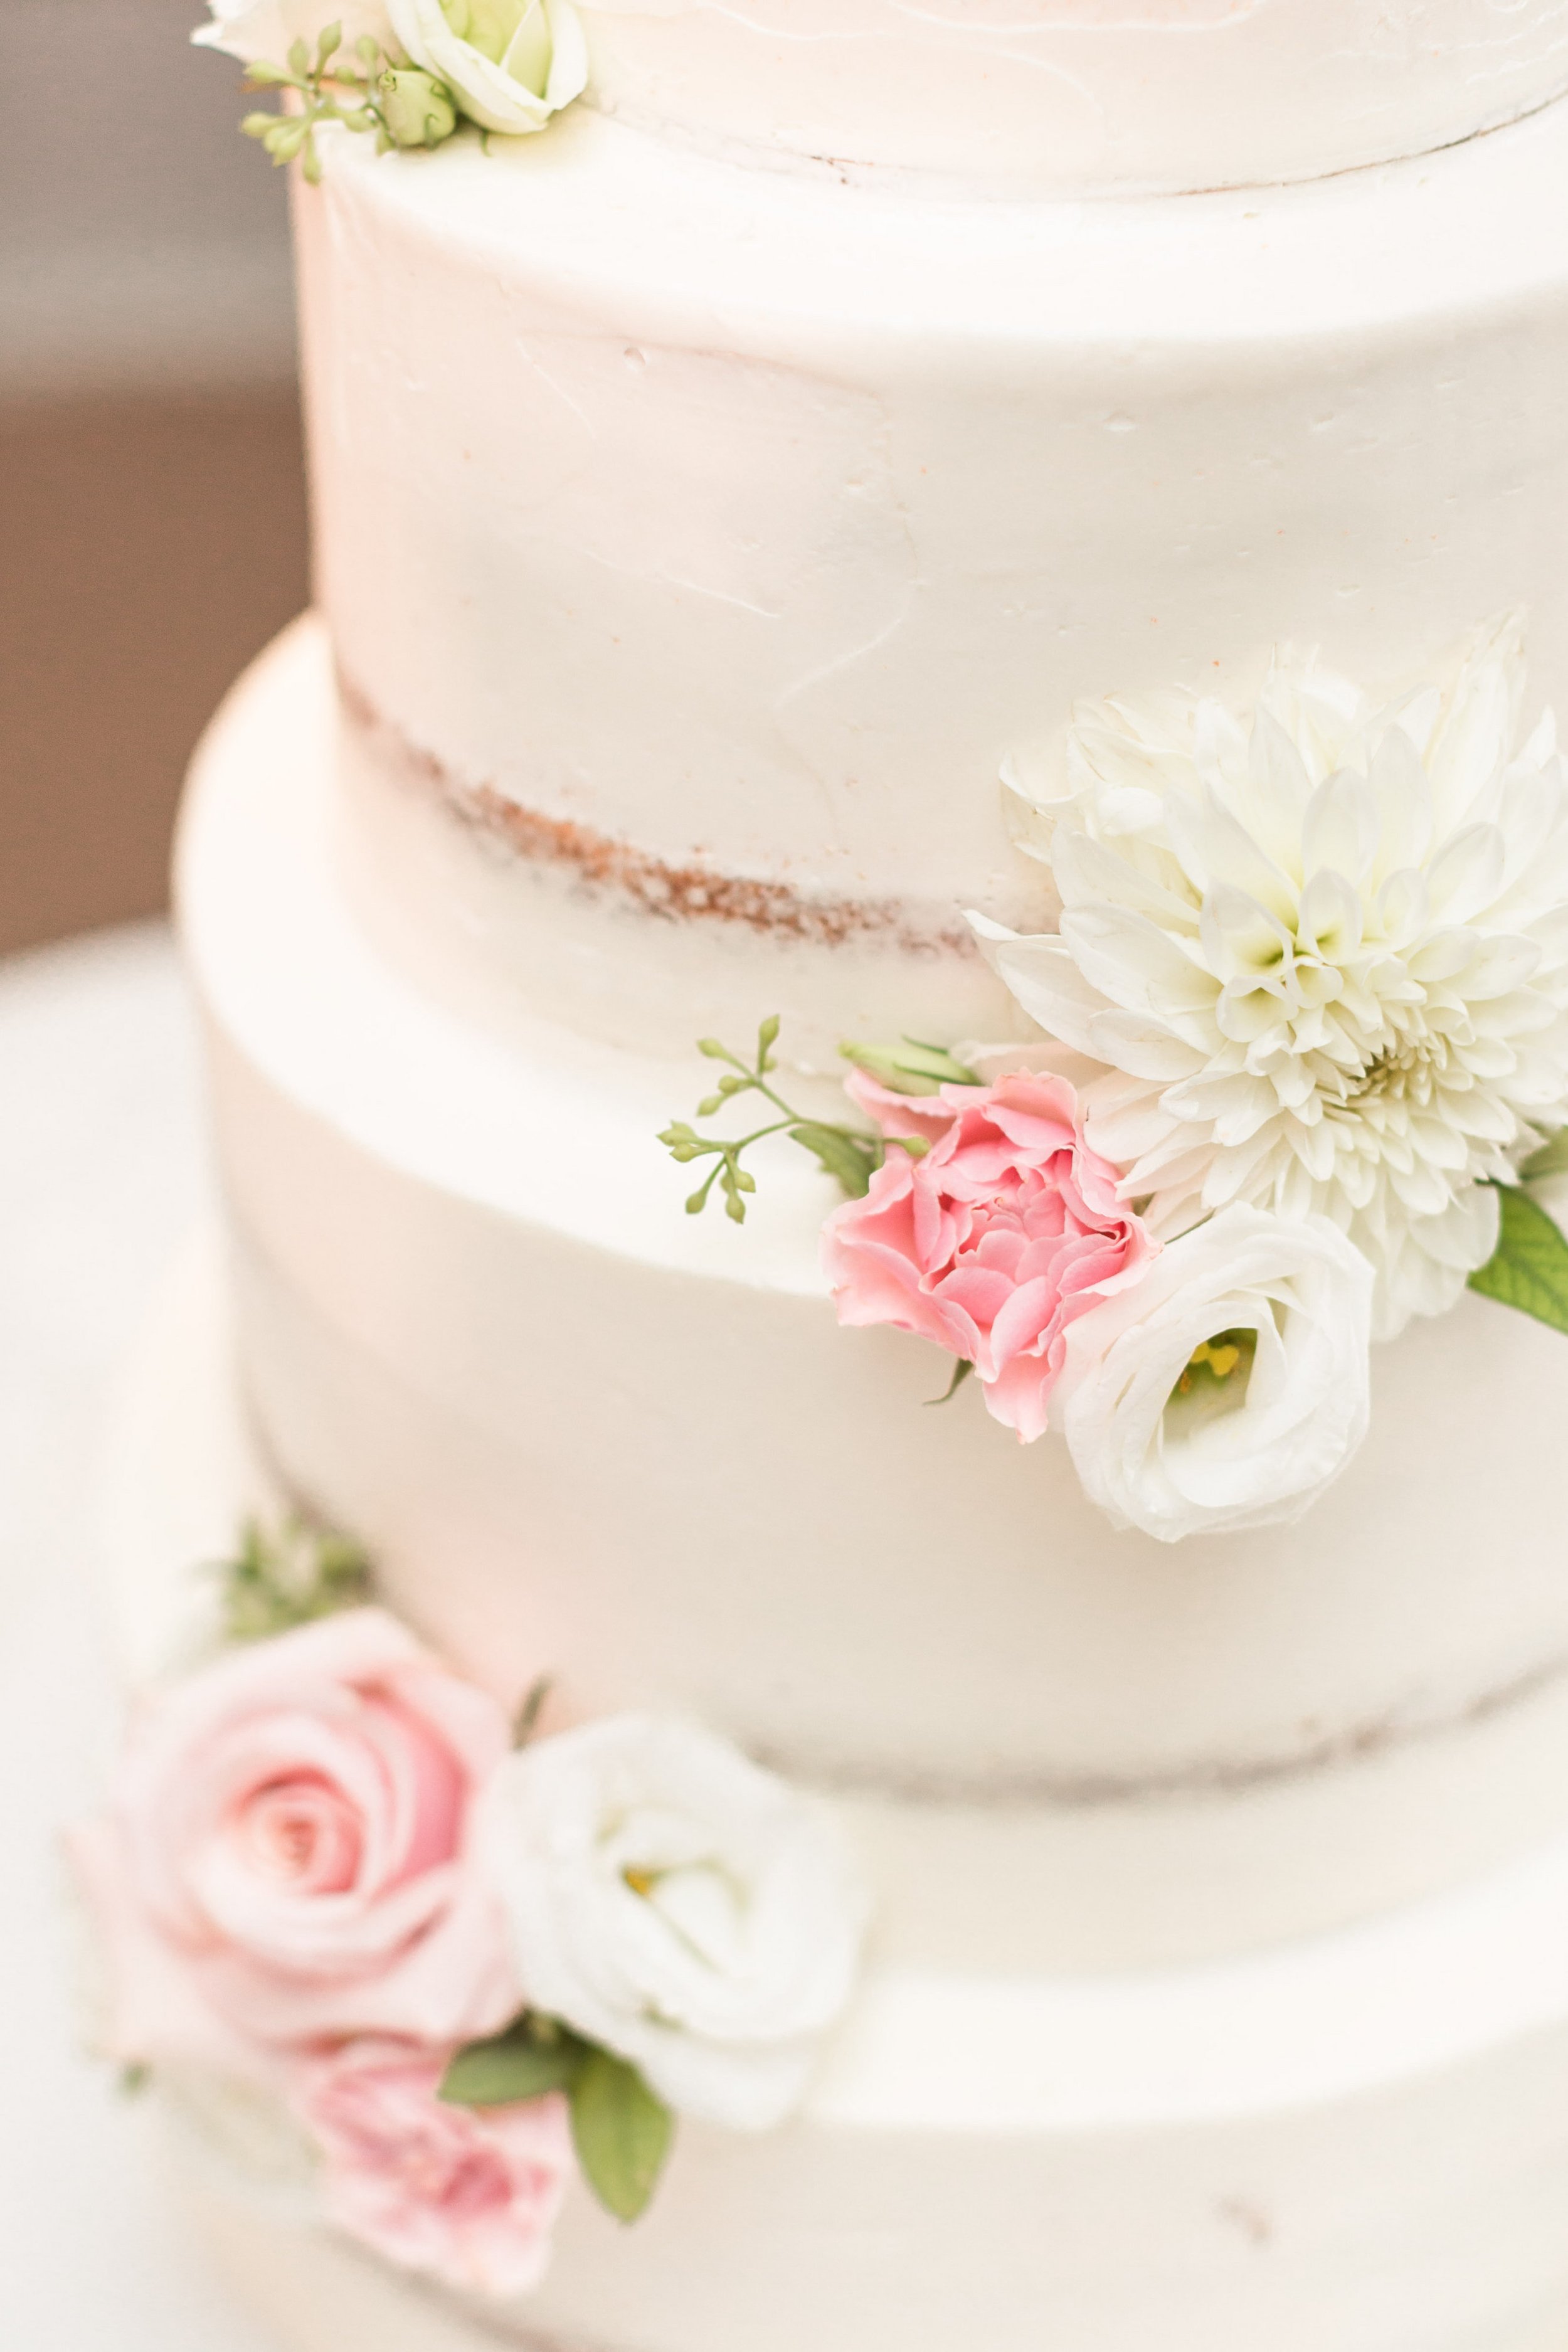 Wedding Cake Designs - Cake Savvy